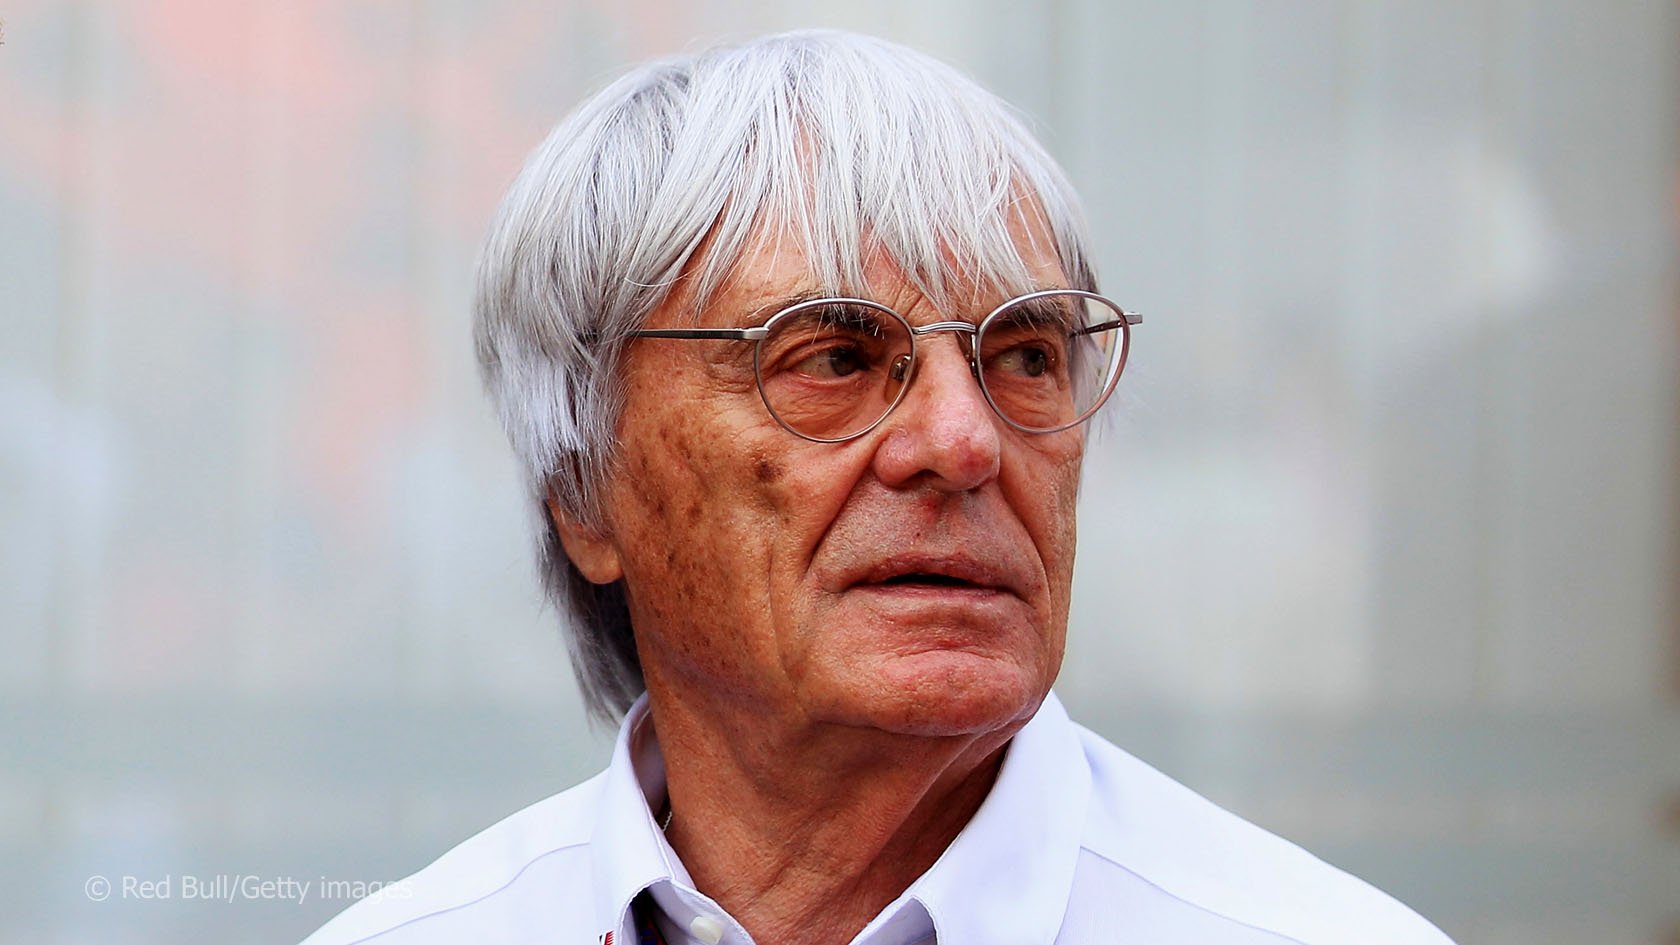 O Μπέρνι Εκλεστοουν προανήγγειλε την αλλαγή του ιδιοκτησιακού καθεστώτος της Formula 1 - Φωτογραφία 1